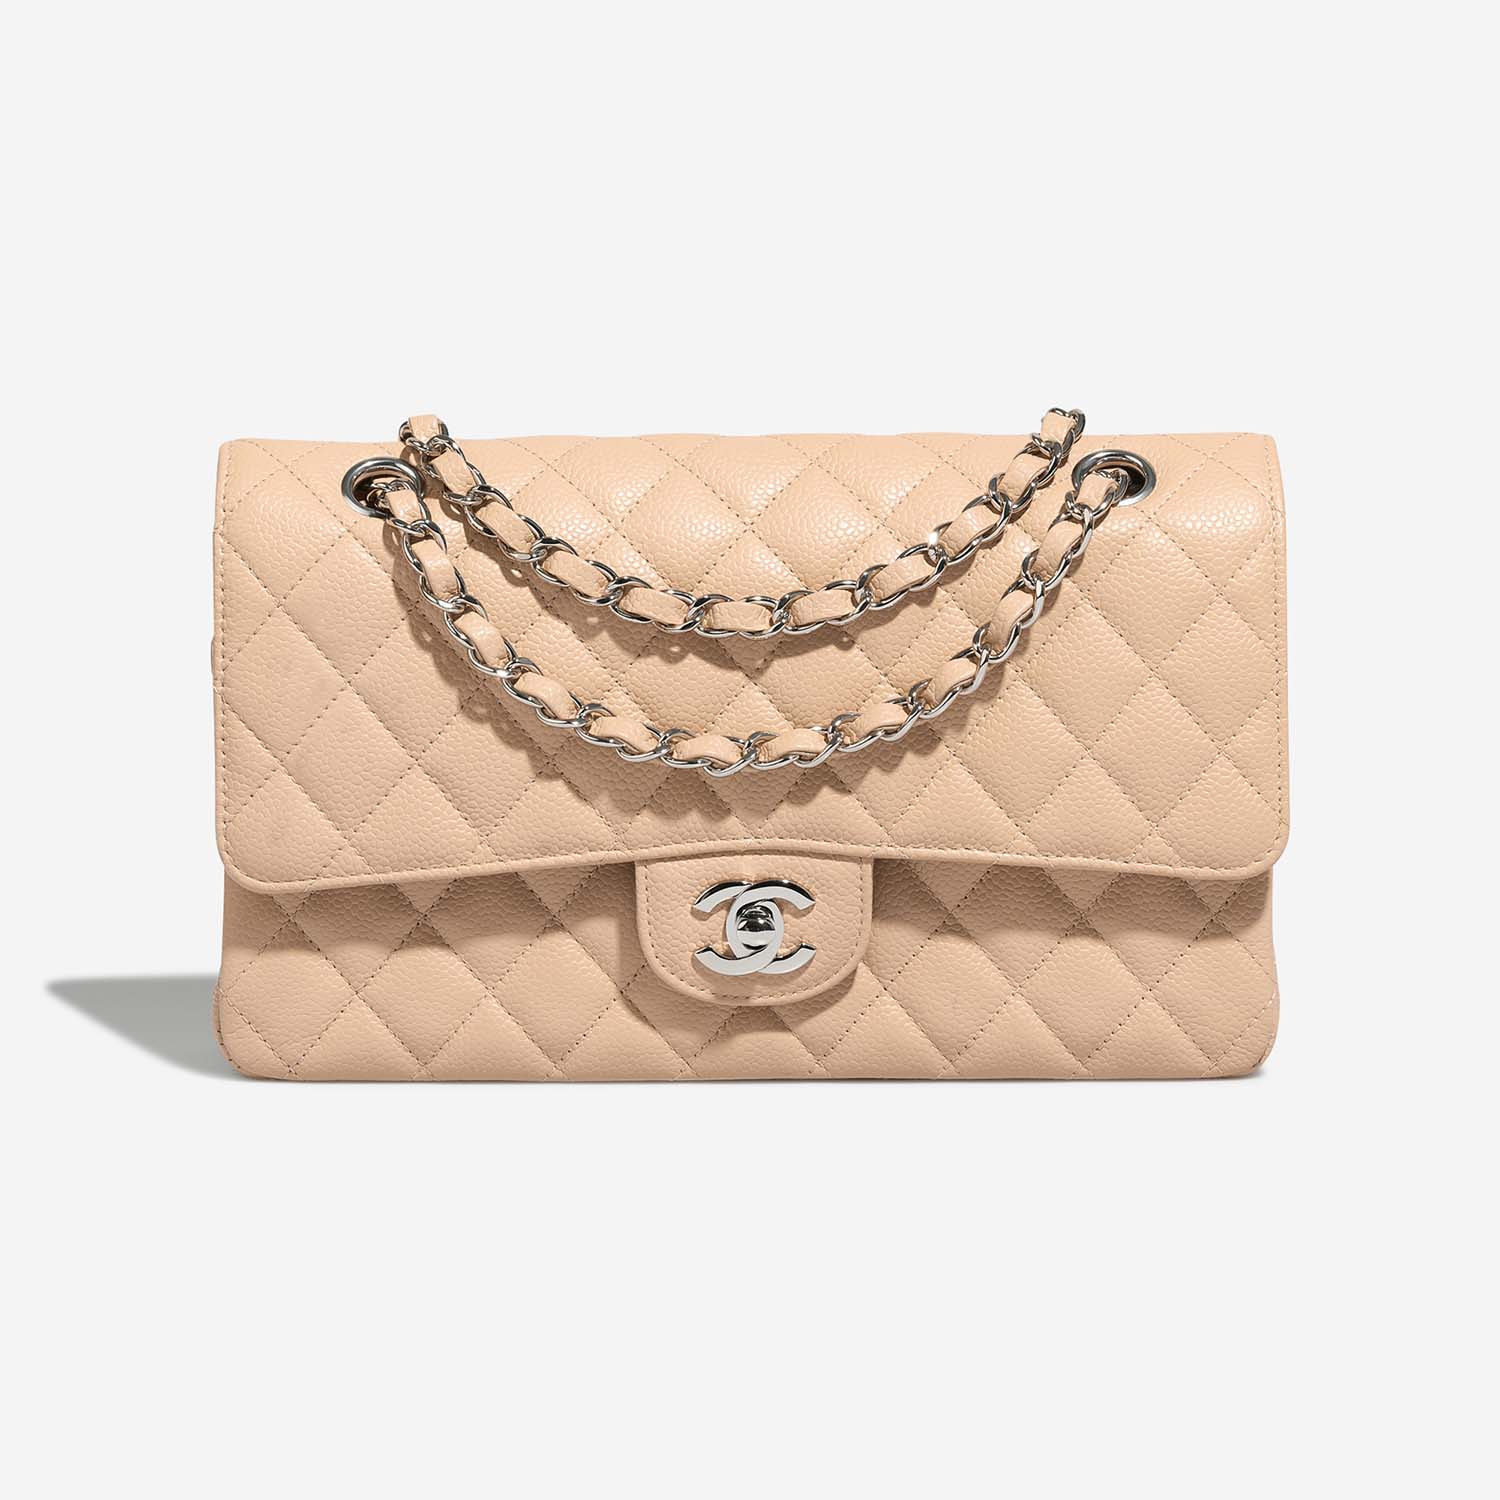 Chanel Beige Lambskin Medium Timeless Double Flap Bag